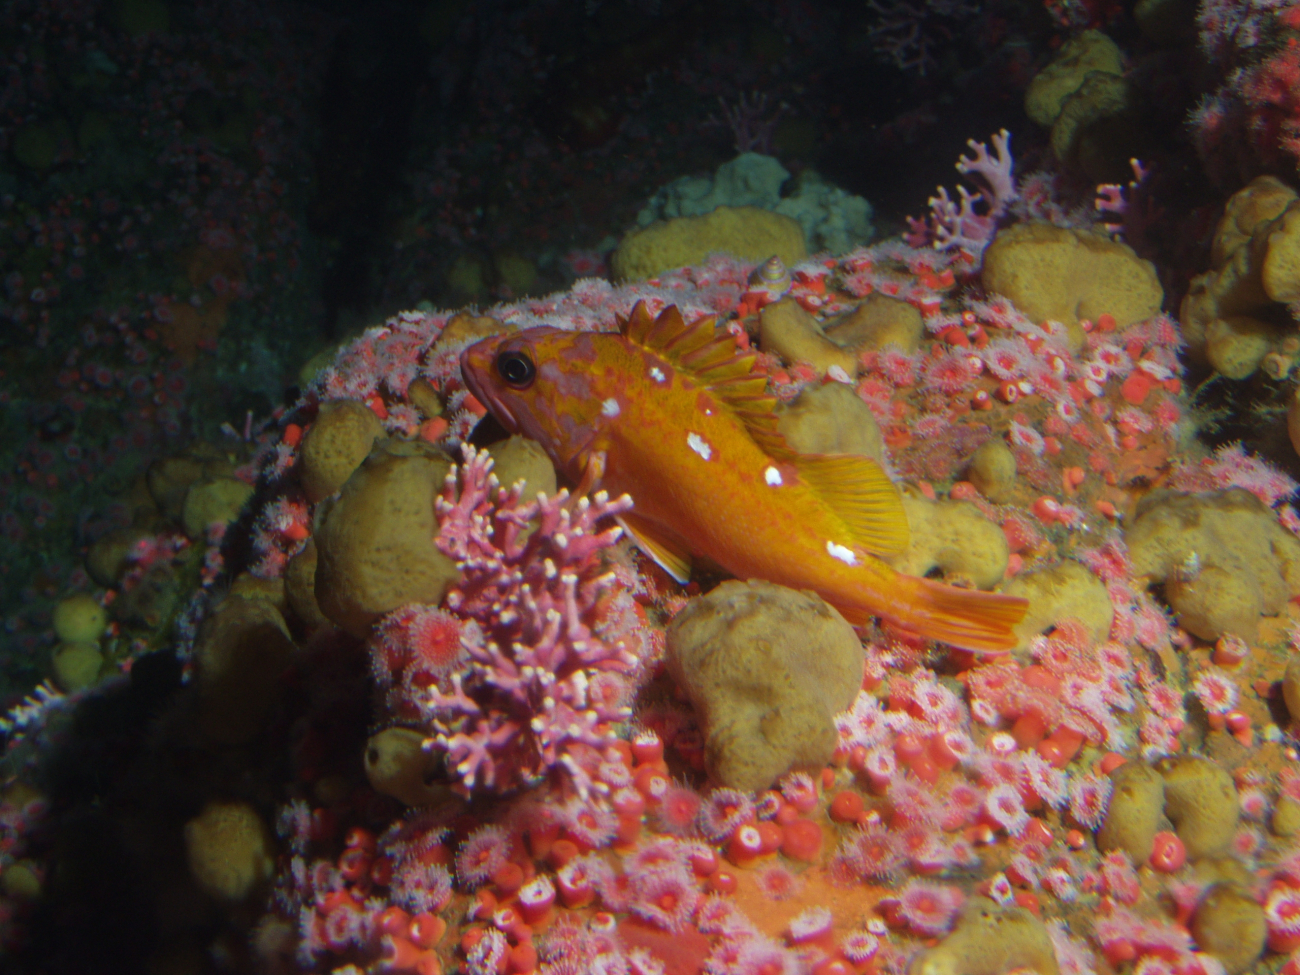 Rosy rockfish (Sebastes rosaceus) in rocky reef habitatat 90 meters depth